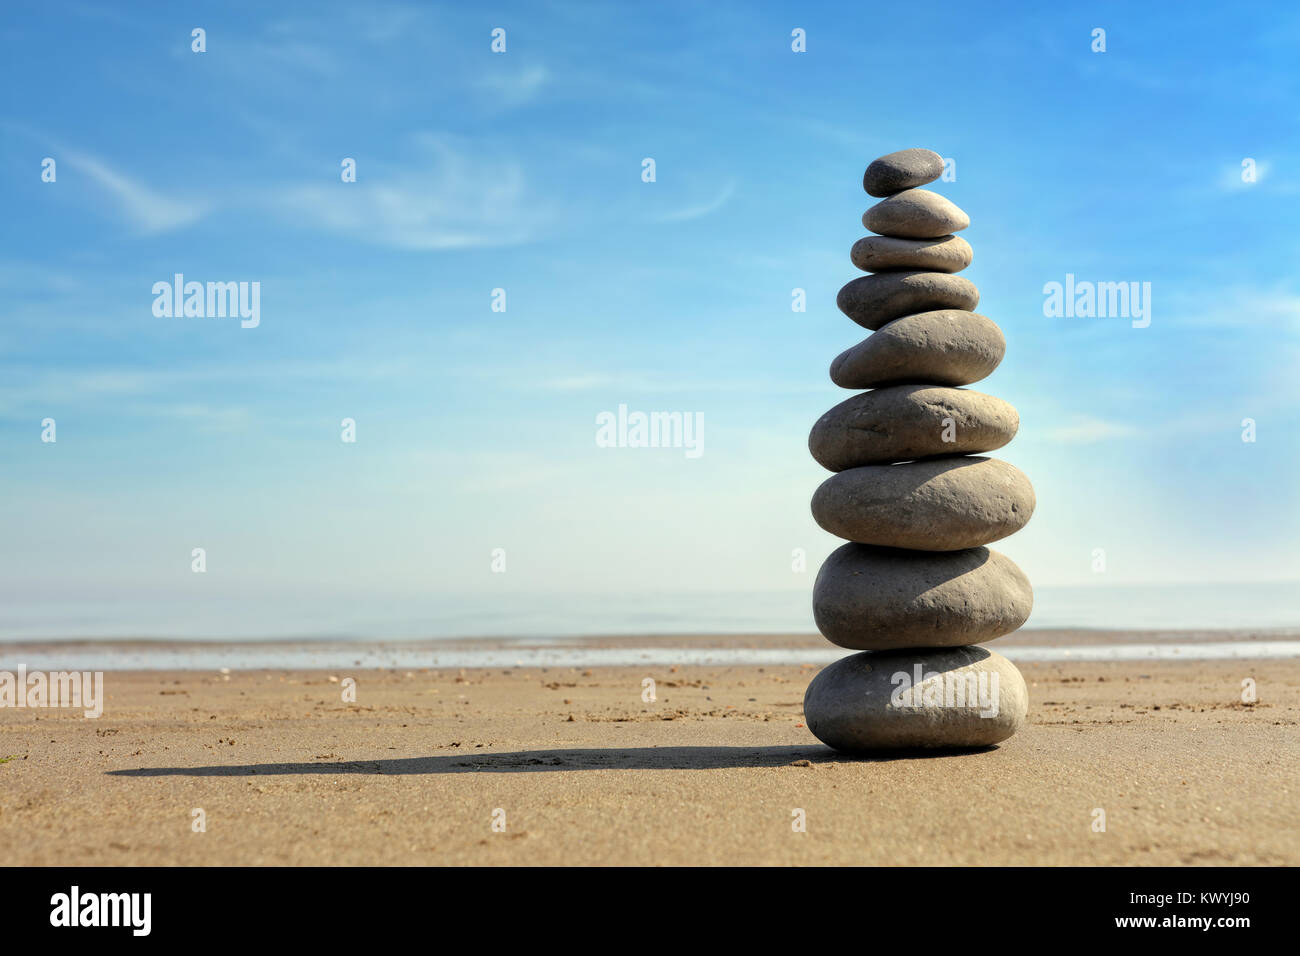 Zen stone balance on the beach Stock Photo